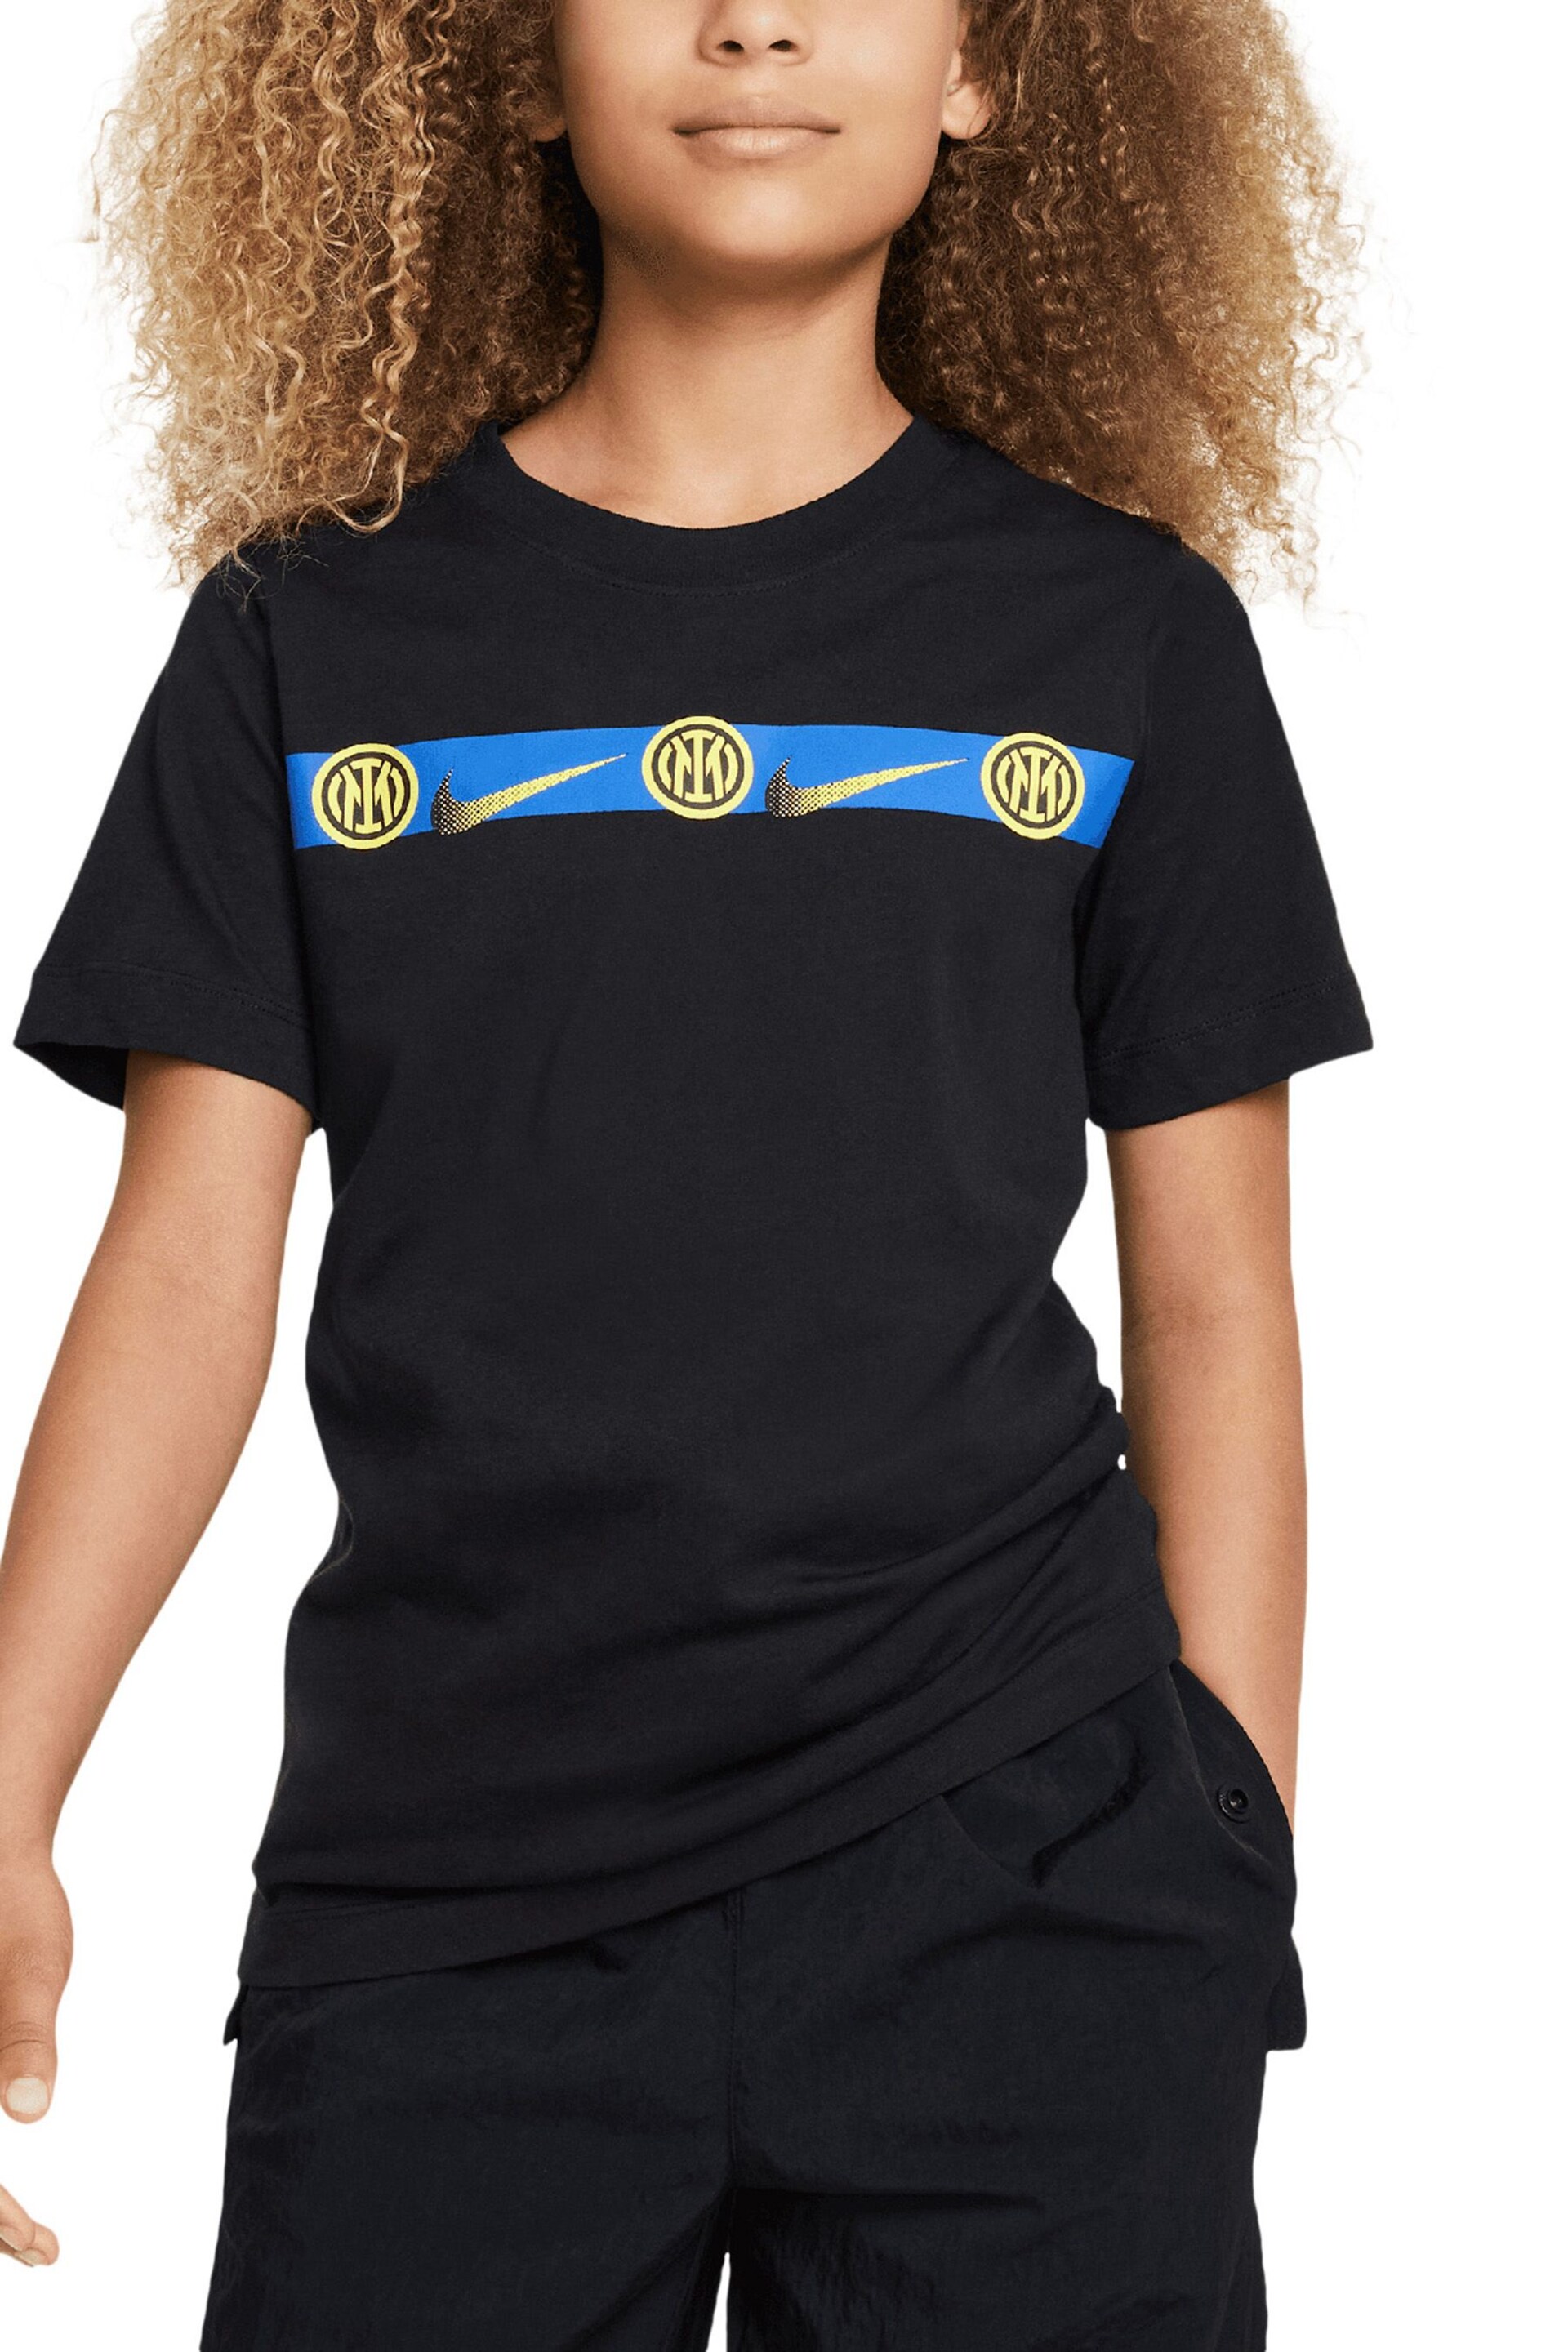 Nike Black Inter Milan Repeat T-Shirt Kids - Image 1 of 2